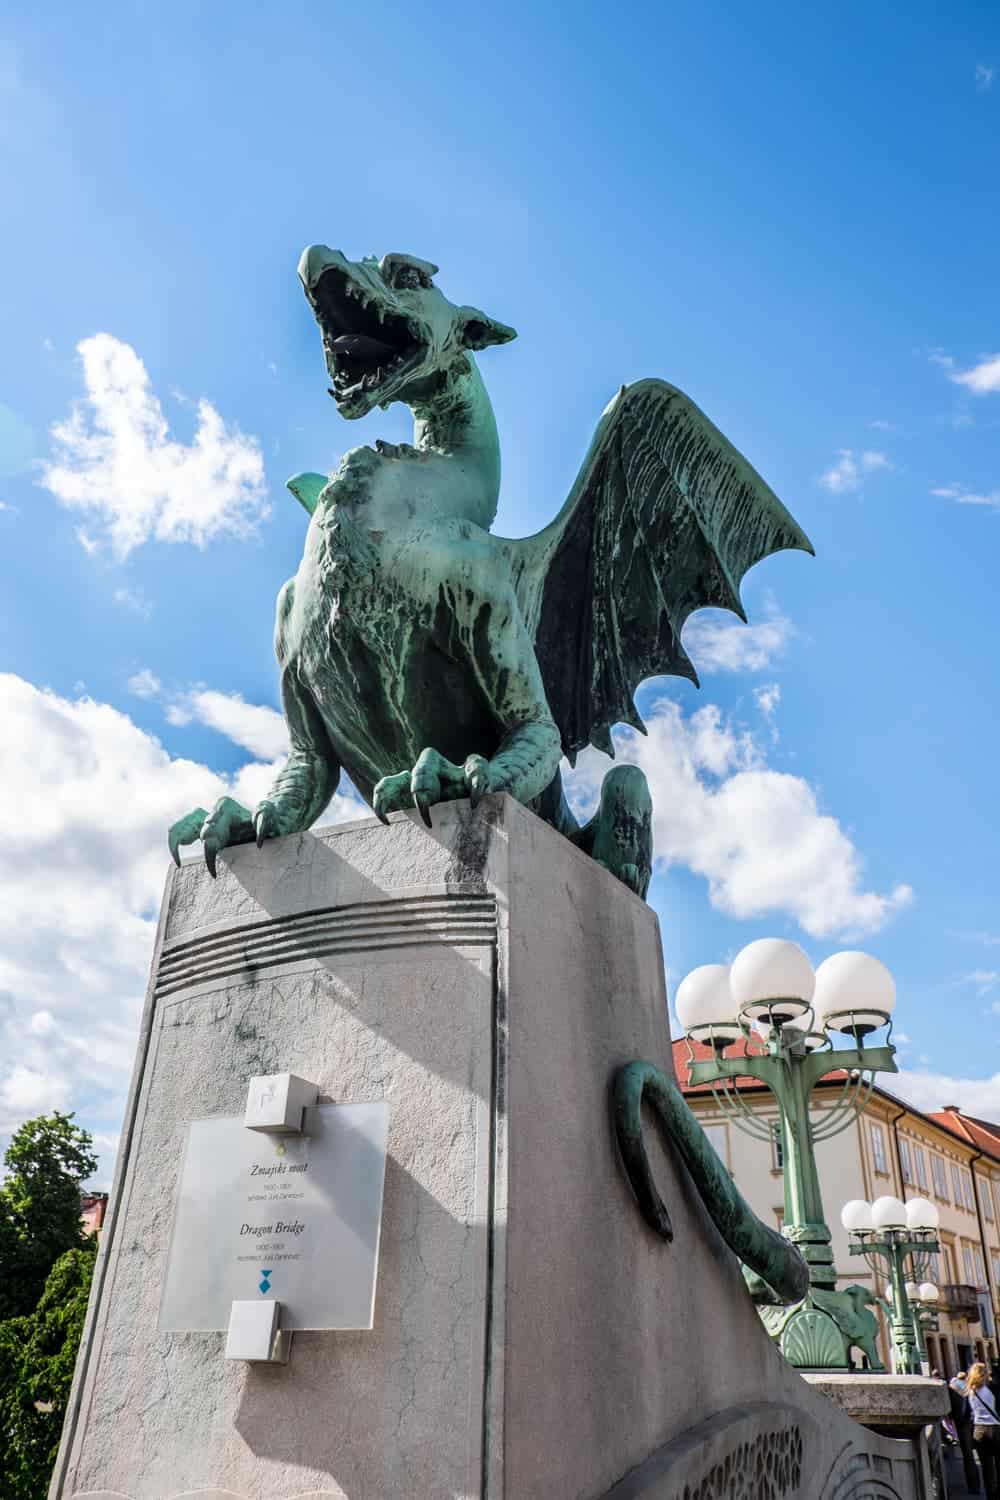 Green dragon at the end of The Dragon’s Bridge in Ljubljana Old Town